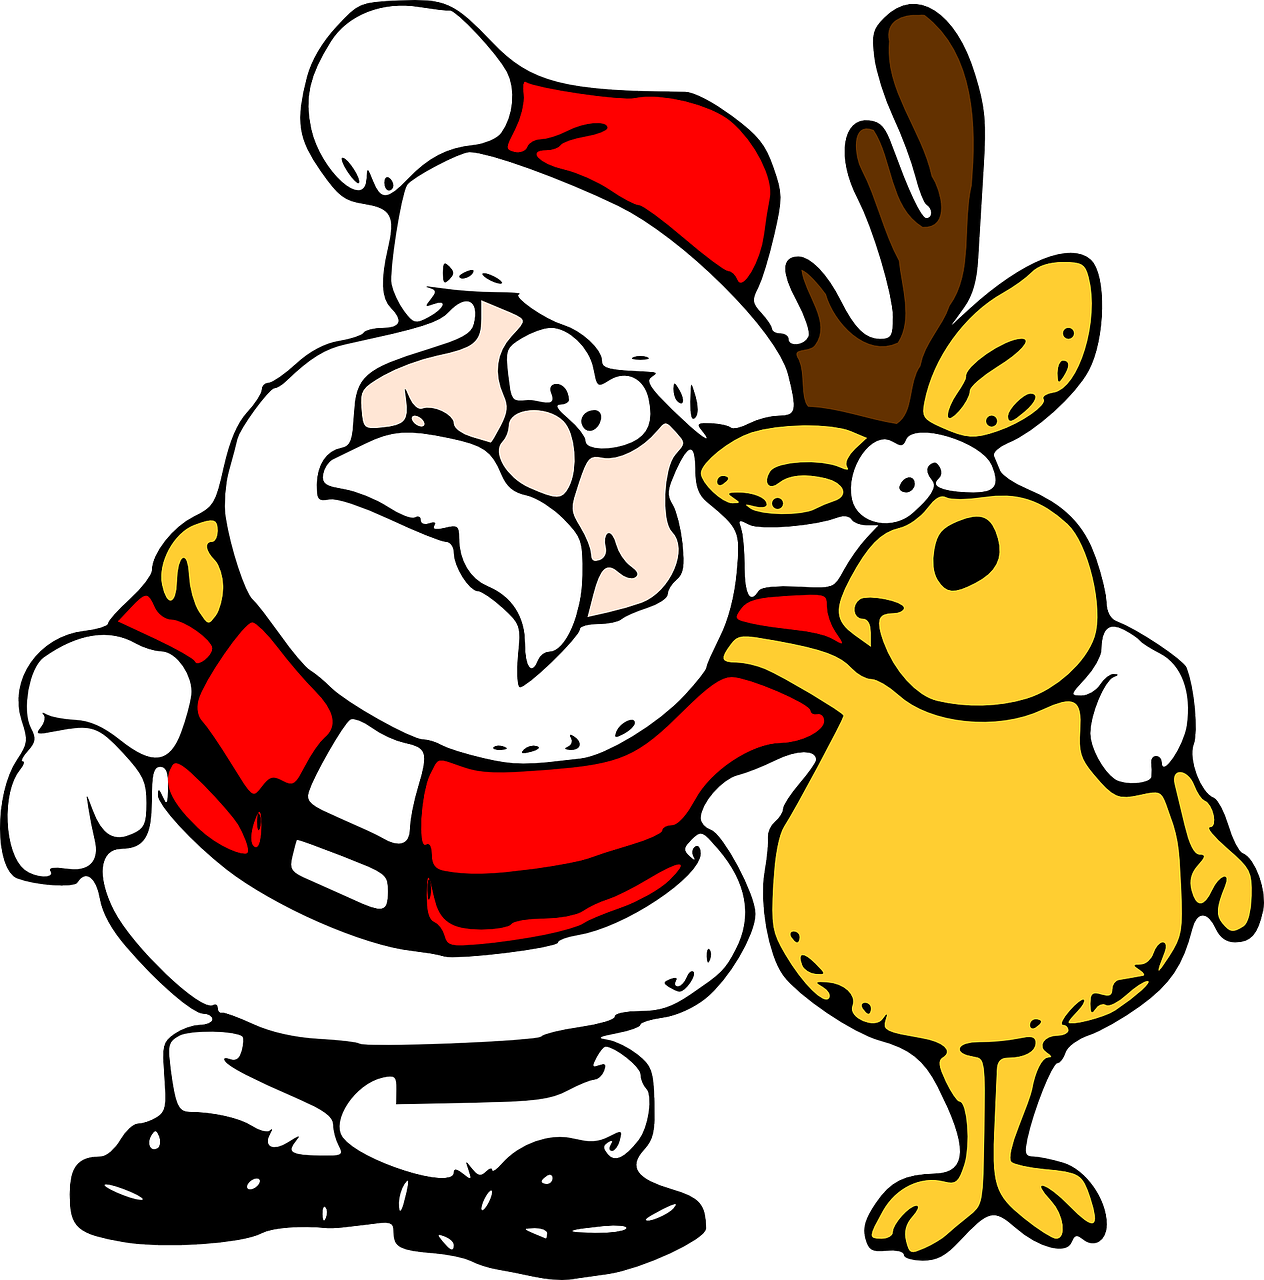 Santa image par clker free vector images de pixabay